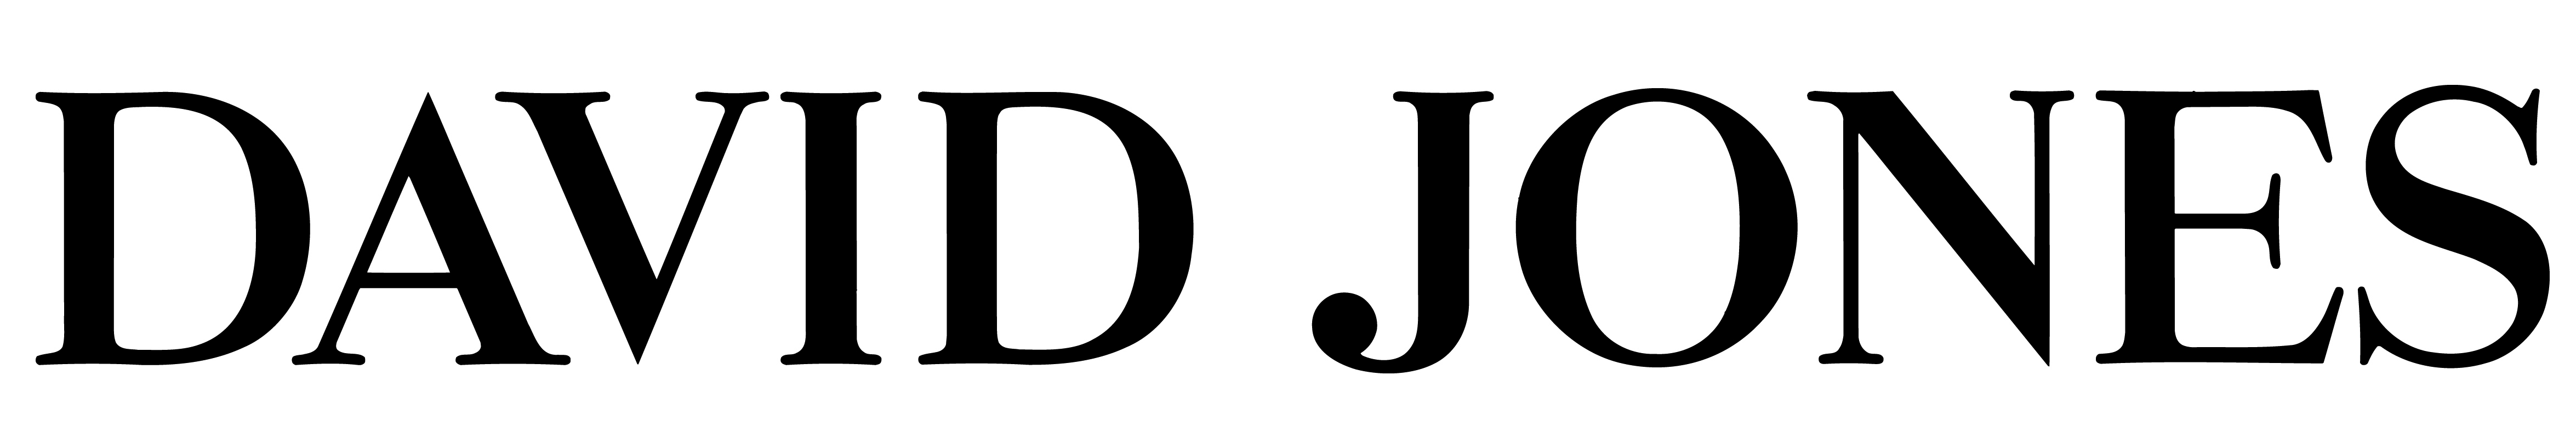 David Jones Brand Logo